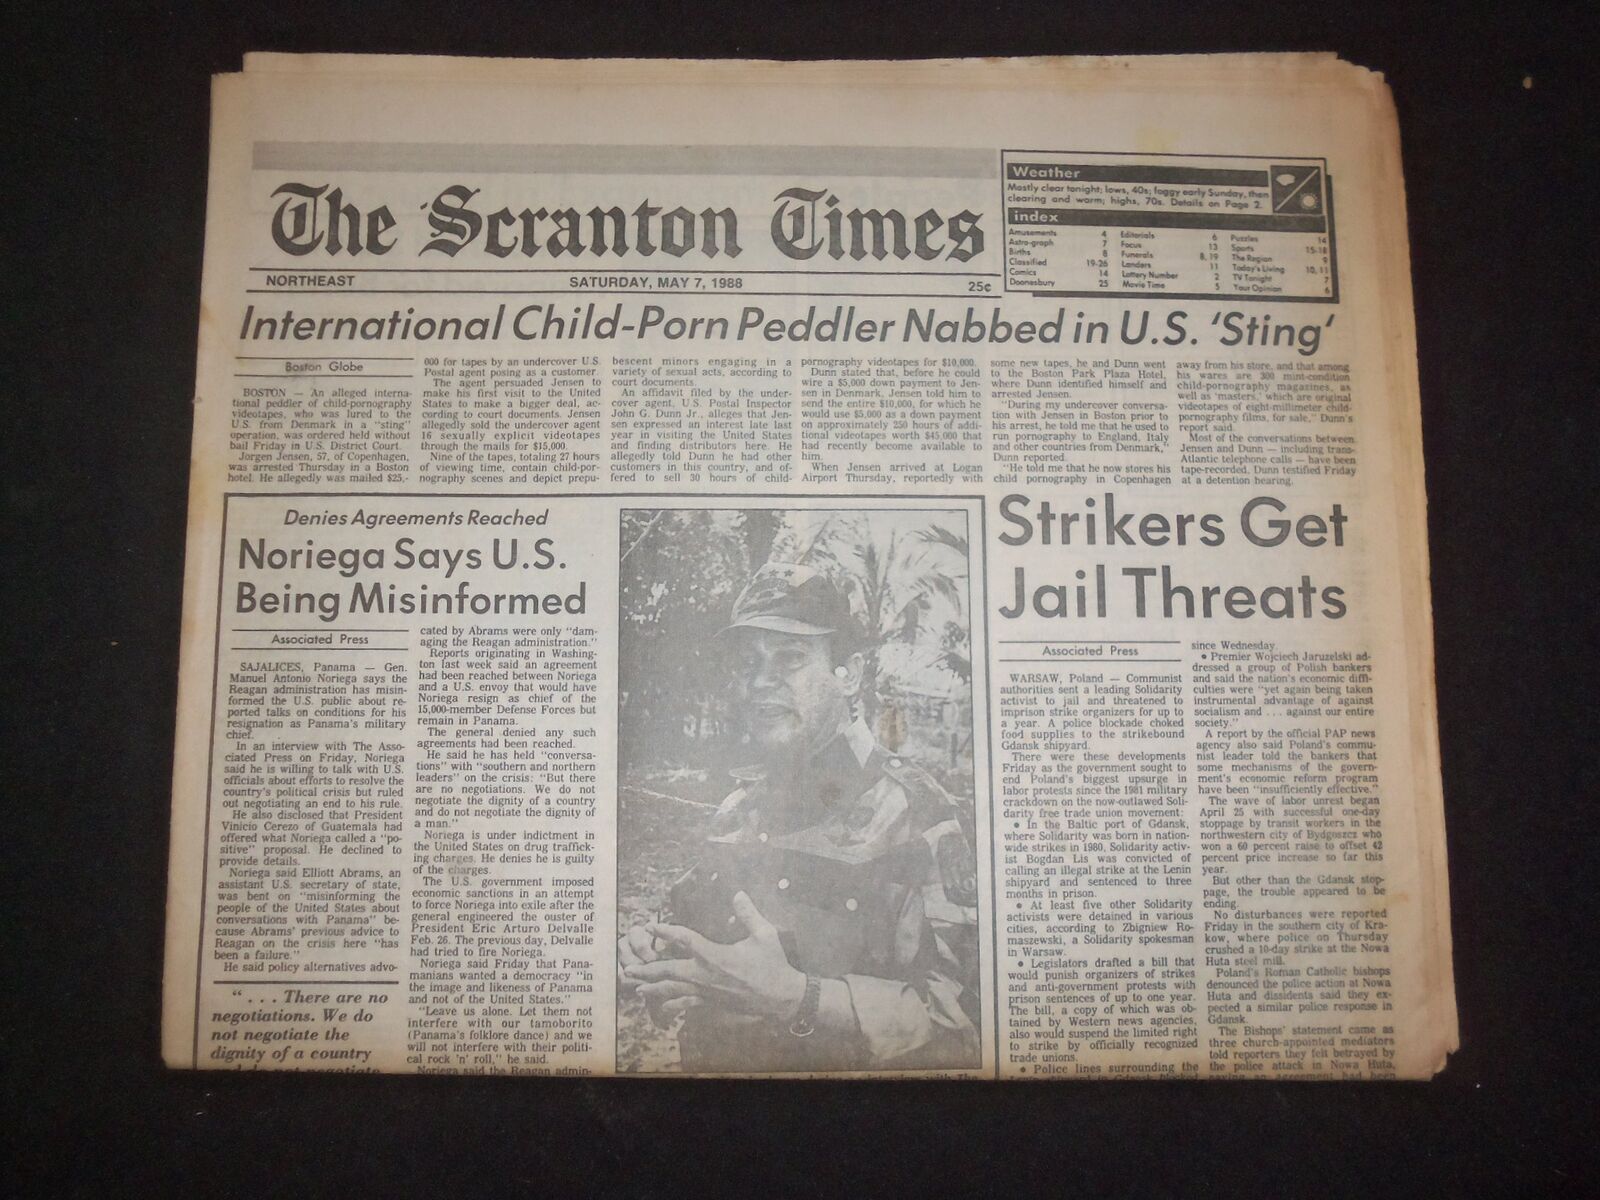 1988 MAY 7 THE SCRANTON TIMES NEWSPAPER -NORIEGA SAYS U.S. MISINFORMED - NP 8327